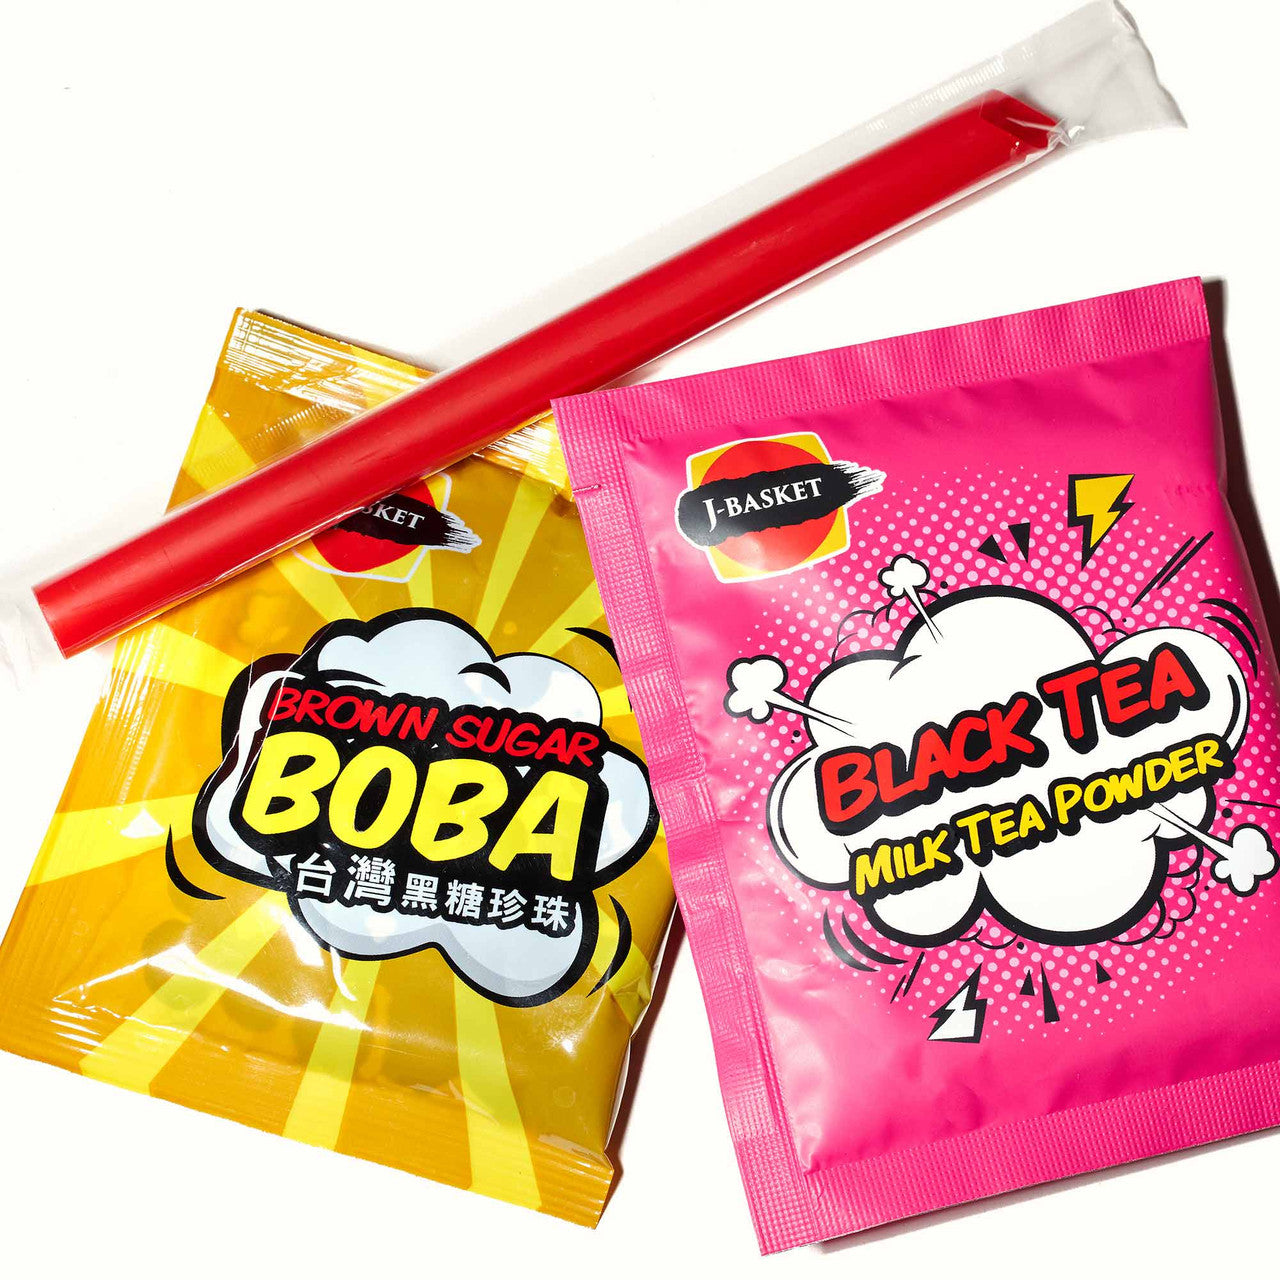 J-Basket Instant Boba Kit, Black Tea Flavor, 285g/10 oz. Box {Imported from Canada}